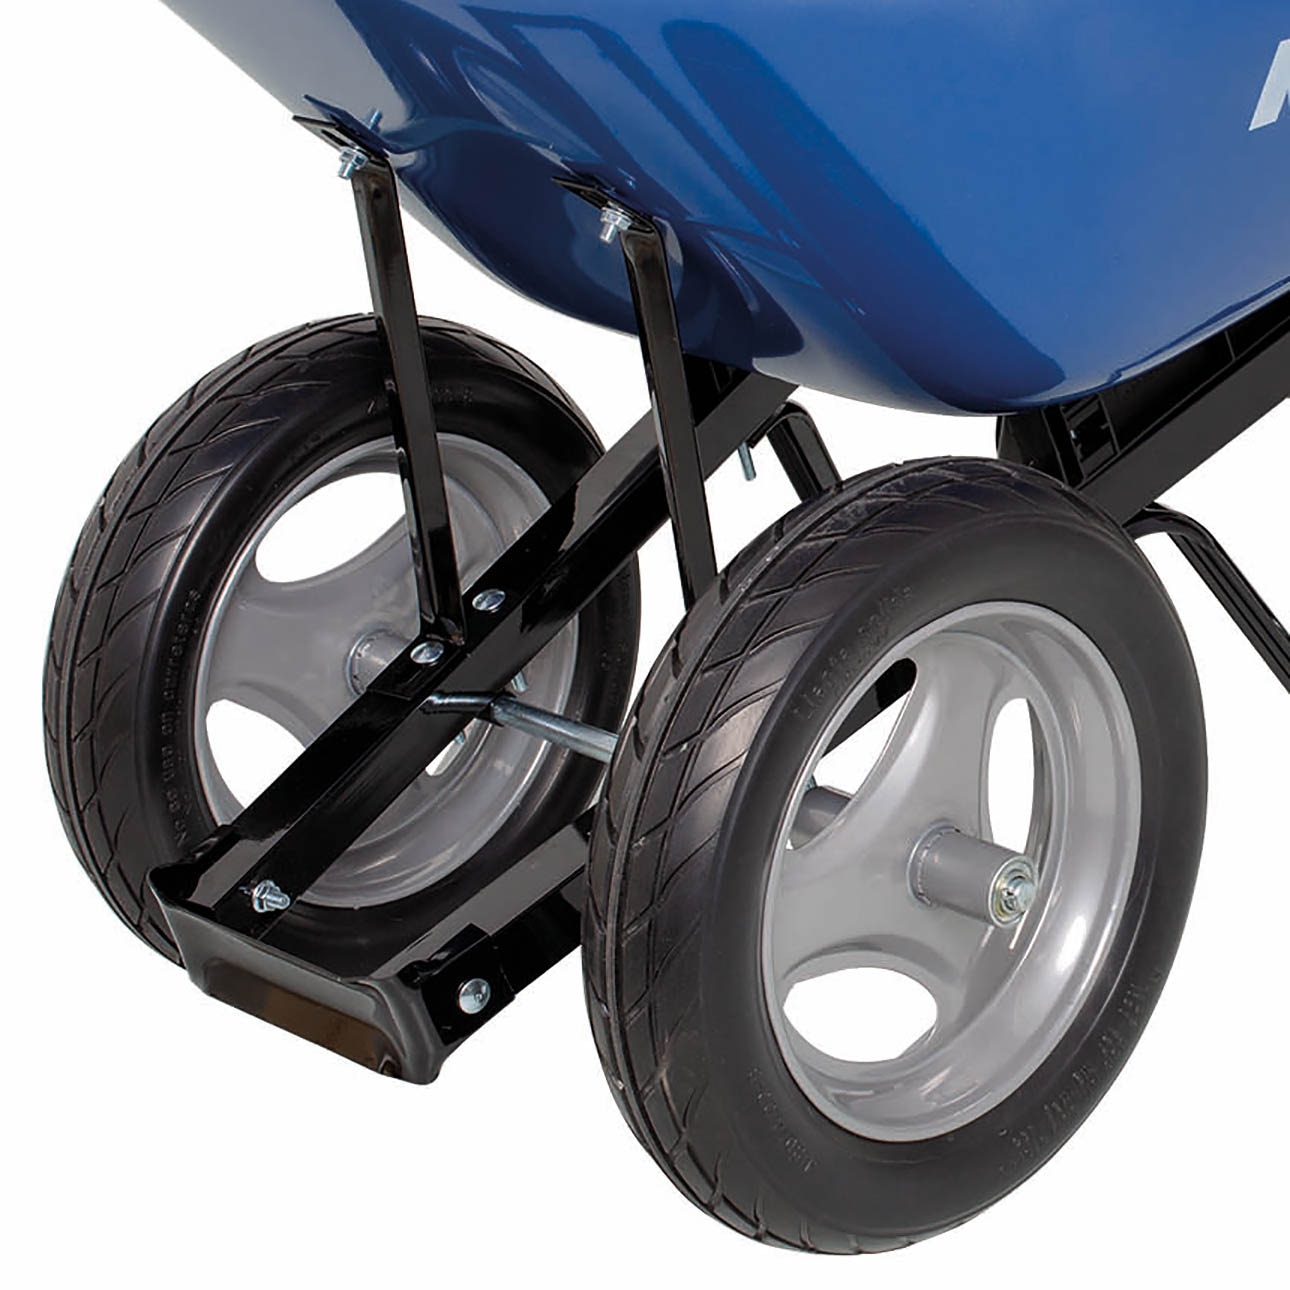 Kobalt 7-cu ft Steel Wheelbarrow with Flat-Free Tire